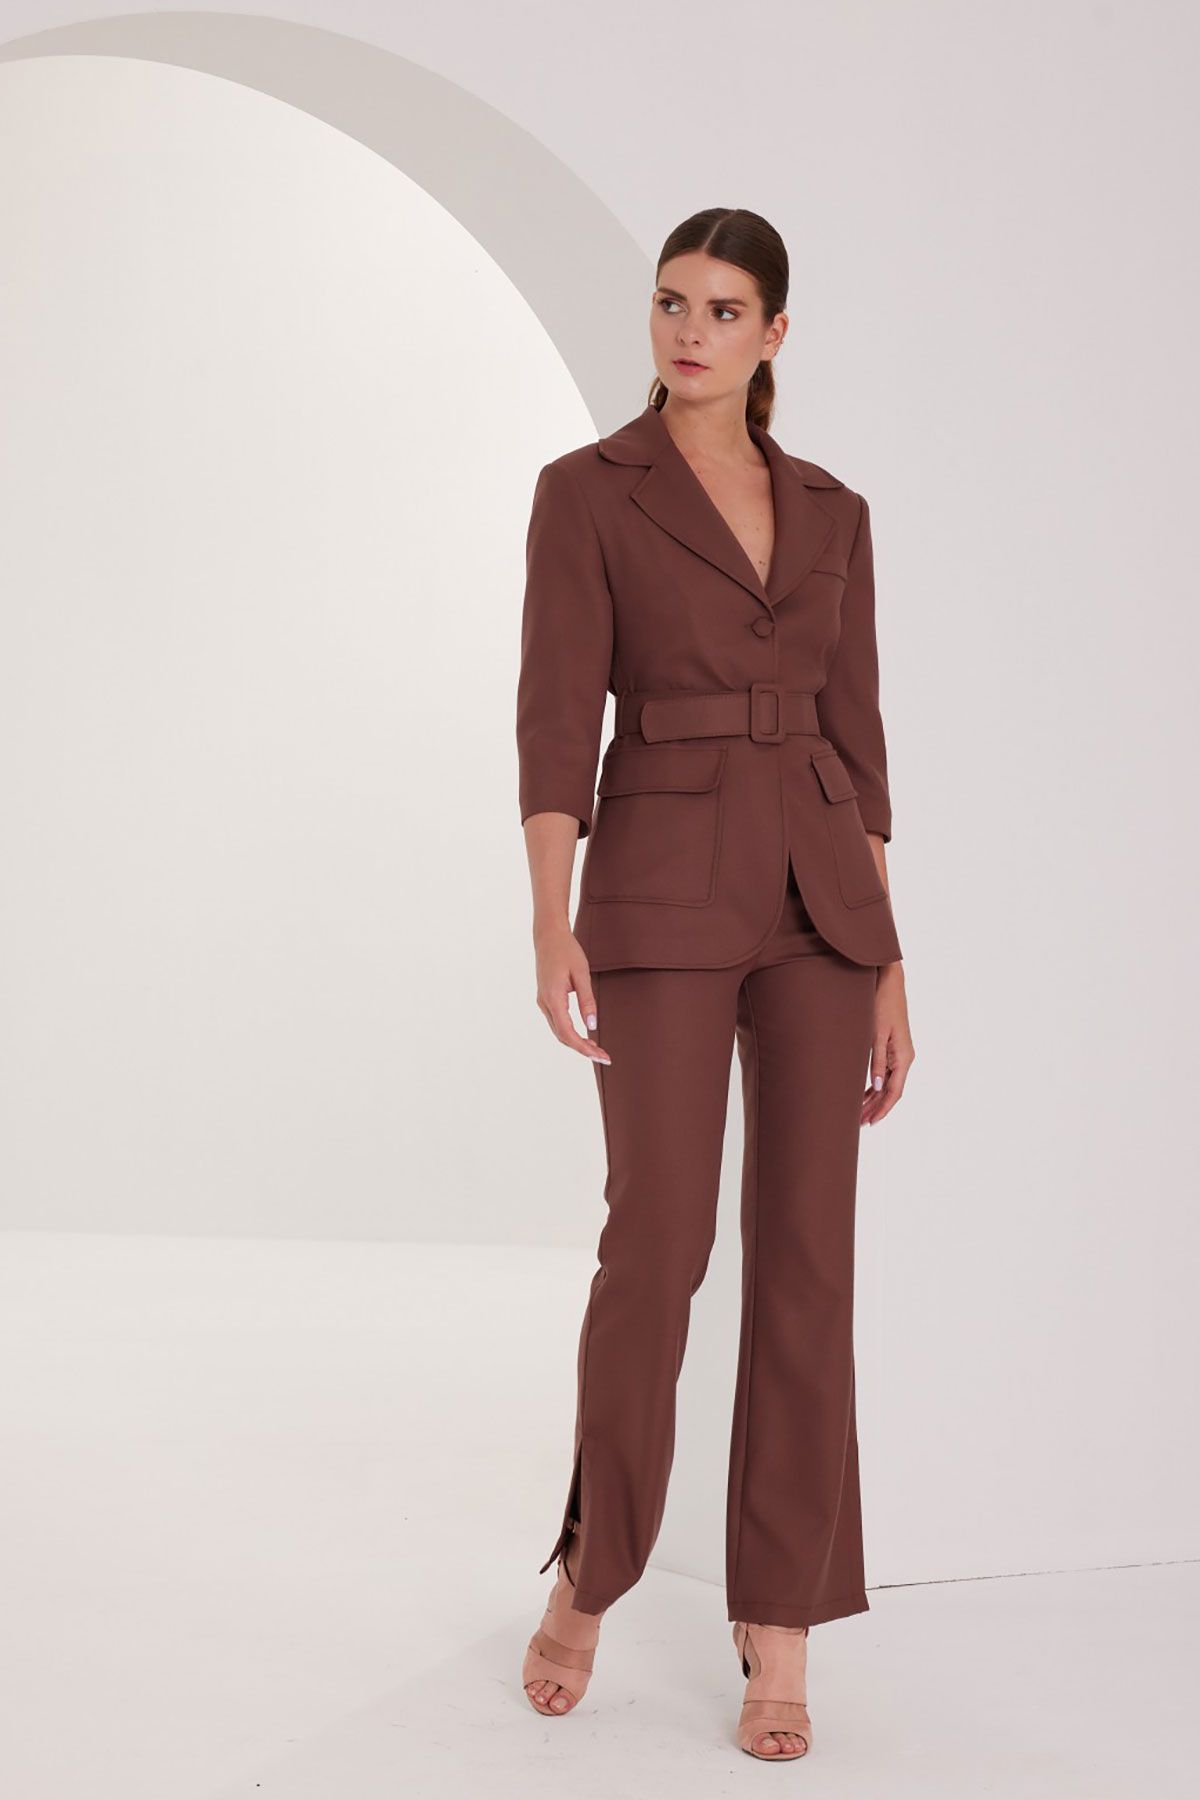 Women's Suits | Trouser Suits for Women | River Island